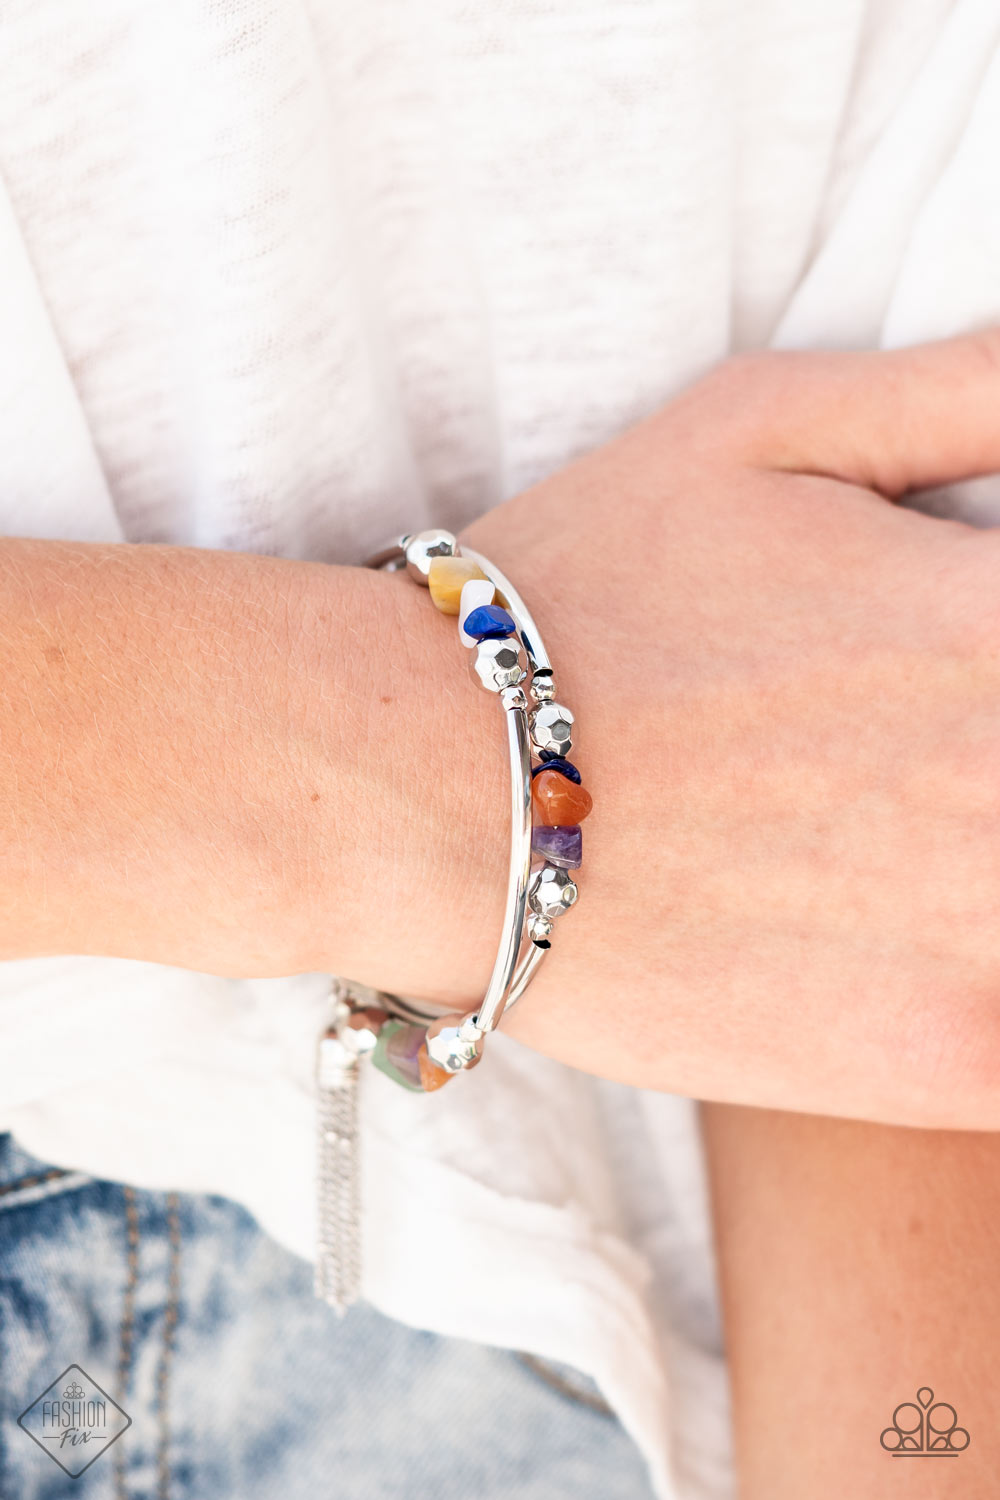 Pebble Prana - Multicolor necklace w/ matching bracelet (Fashion Fix - July 2021)